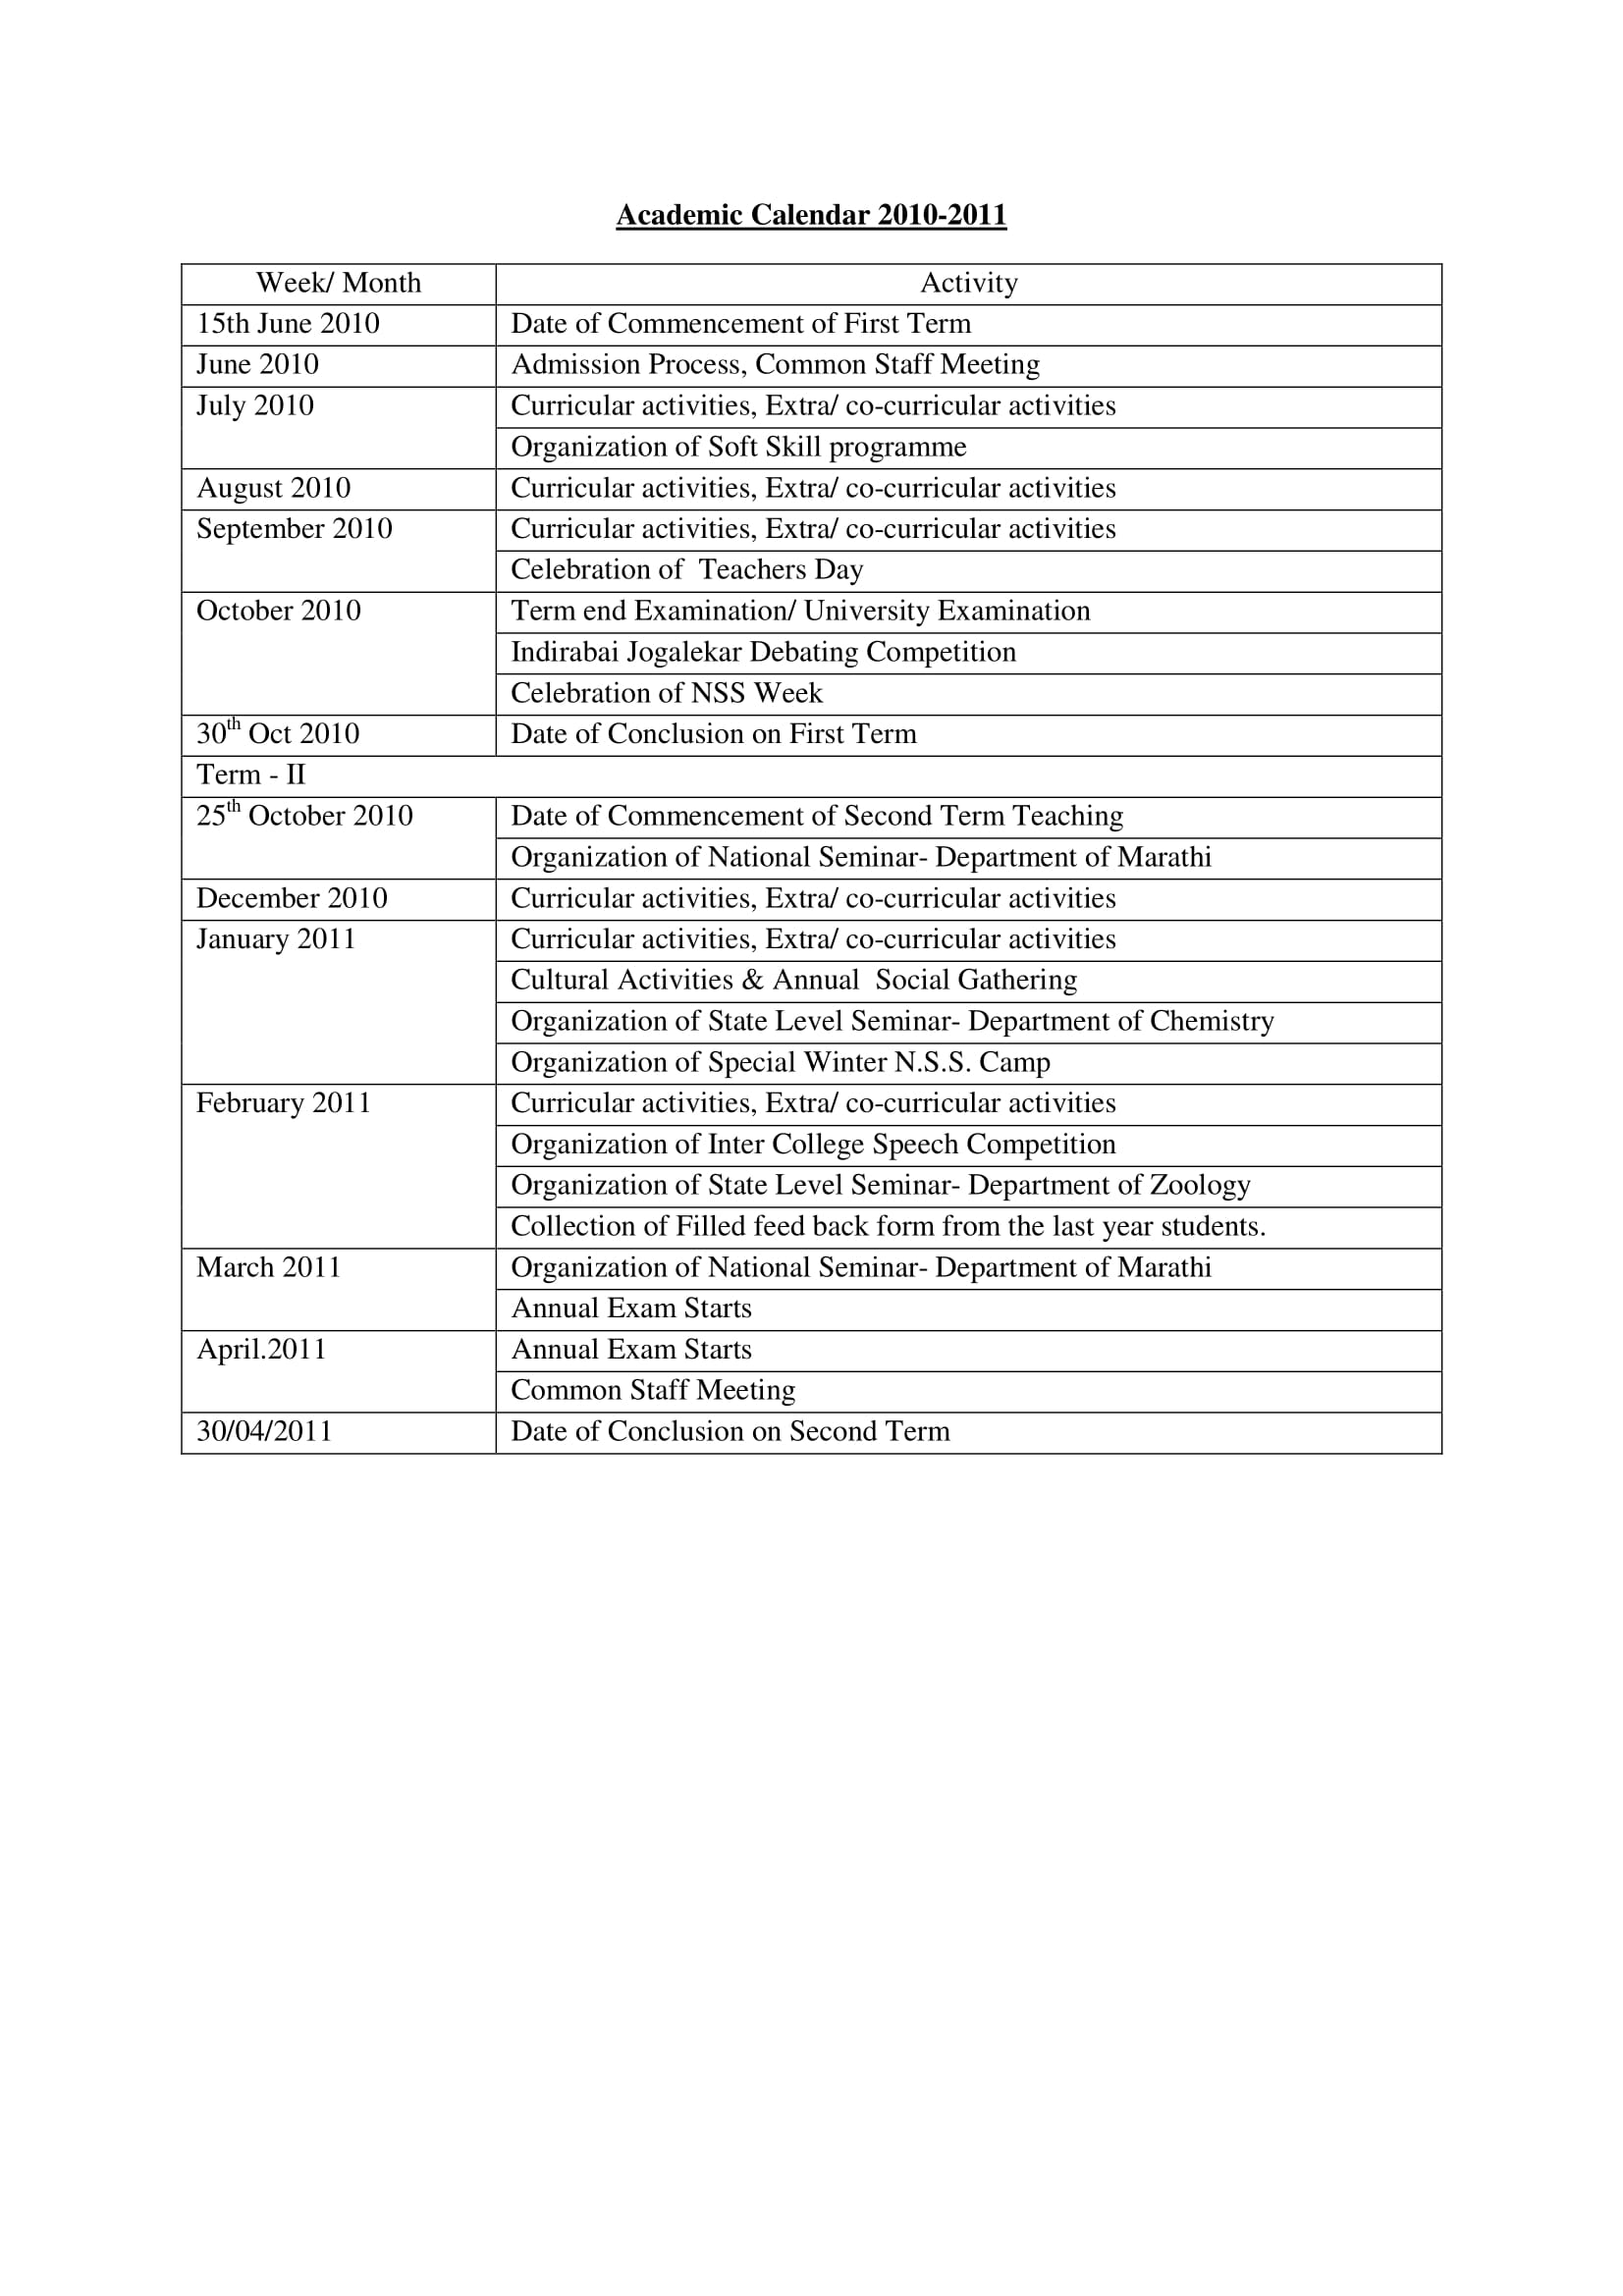 Academic calendar 2010-11